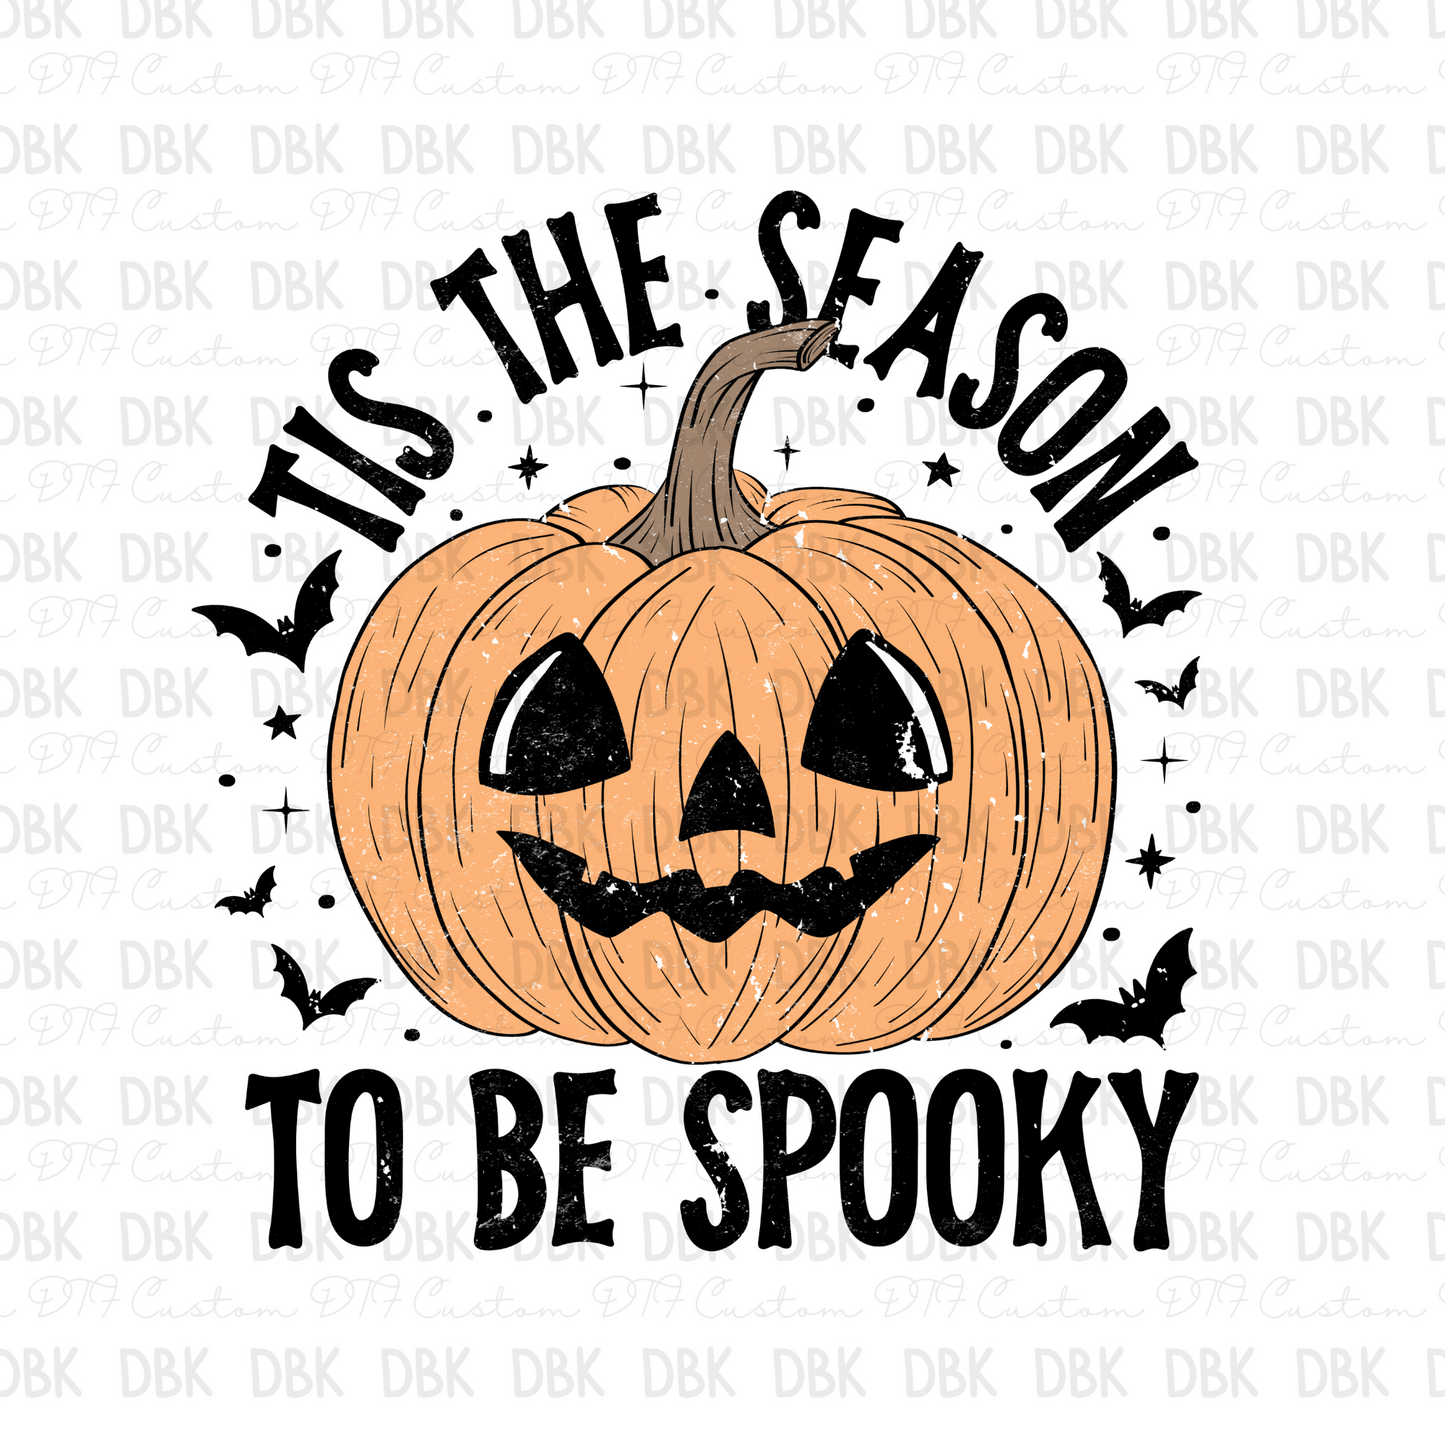 Tis the season to be spooky DTF transfer